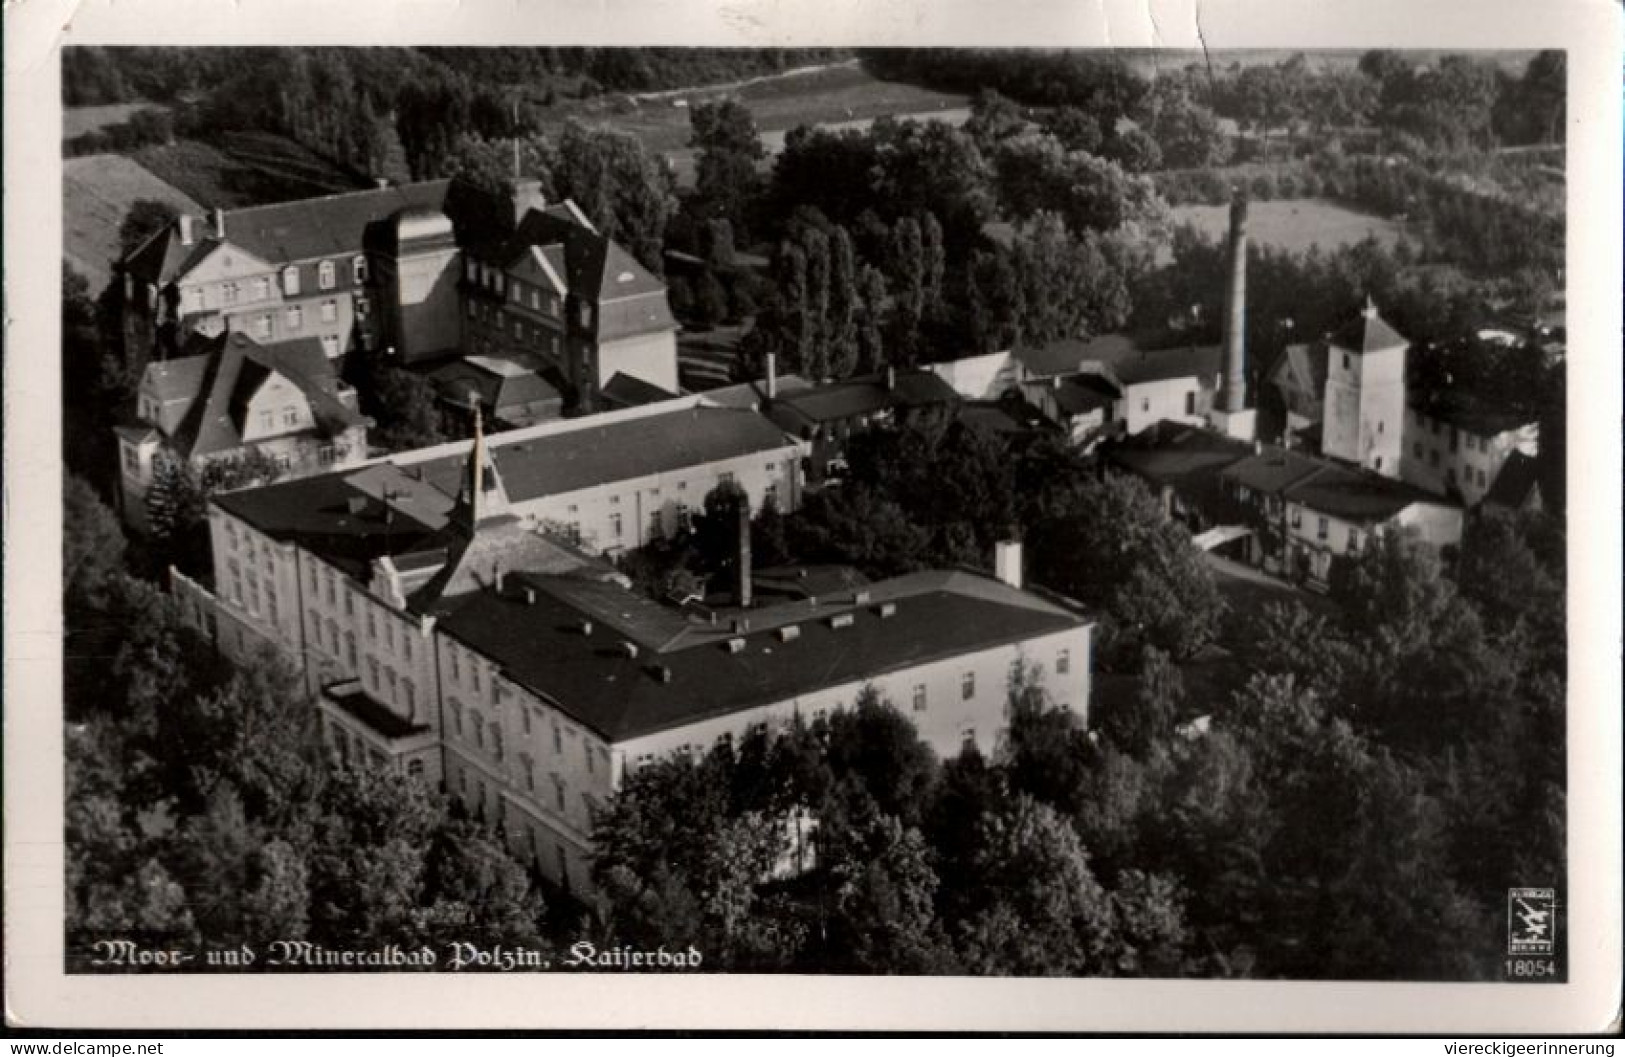 ! Alte Luftbild Ansichtskarte Bad Polzin, Kaiserbad, 1942, Verlag Klinke - Pommern